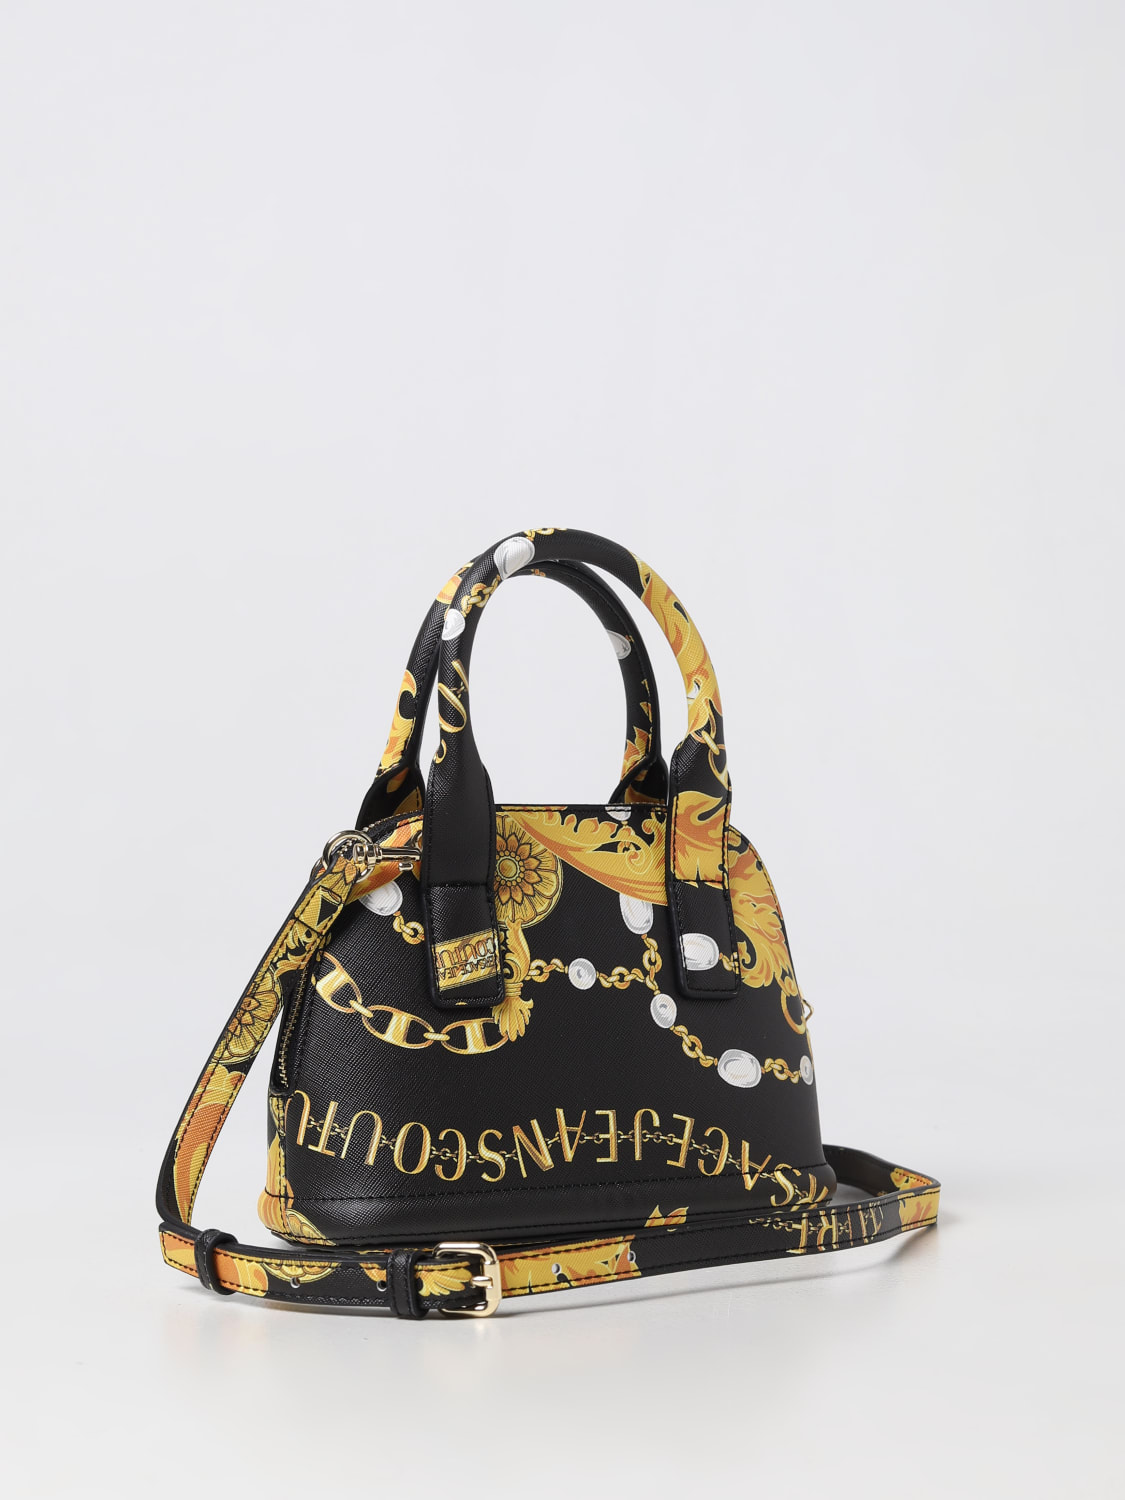 Versace Baroque Print Saffiano Leather Tote Bag